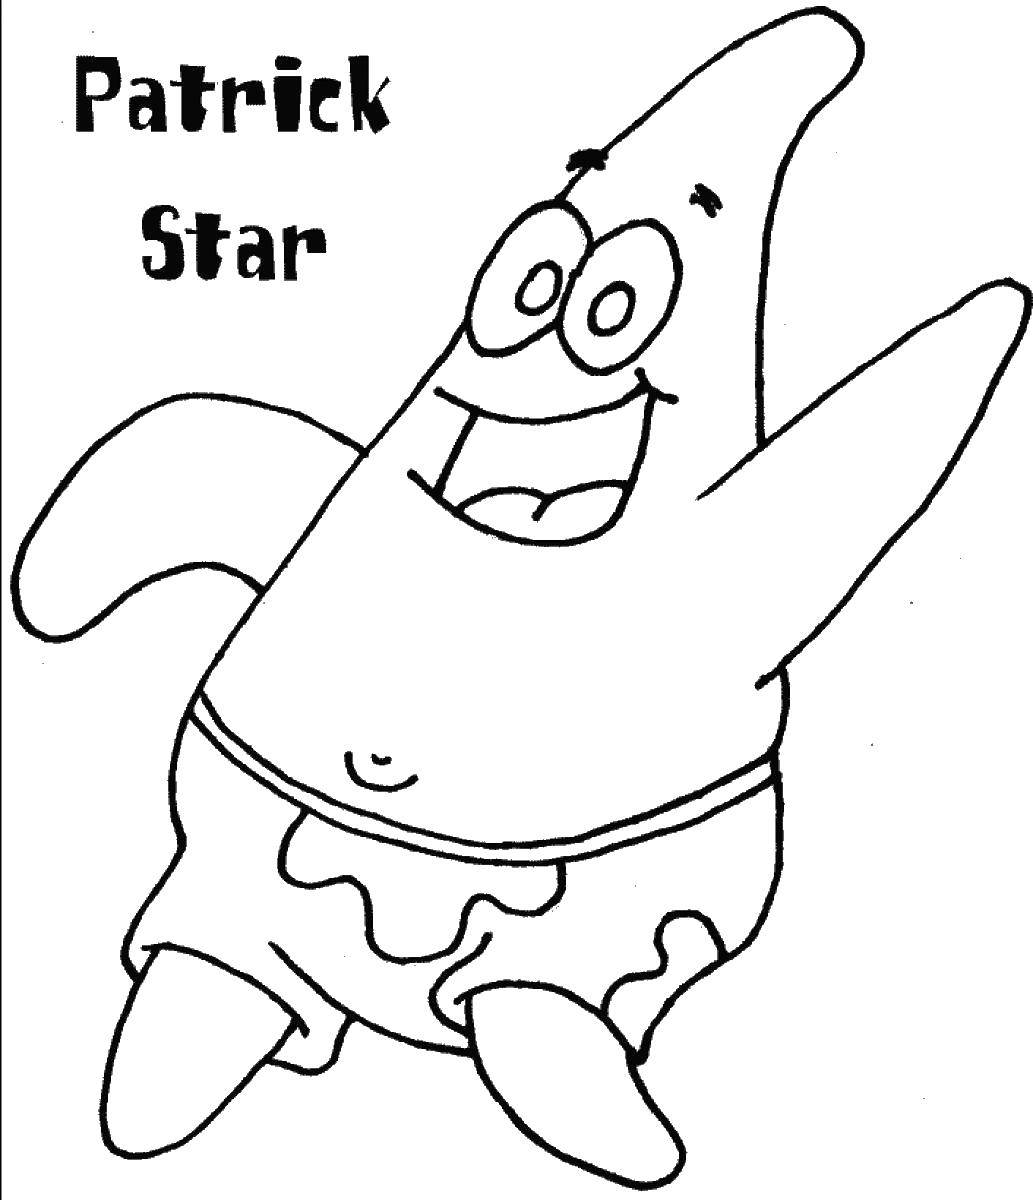 Coloring Patrick star. Category Spongebob. Tags:  cartoons, spongebob, Patrick, Old.